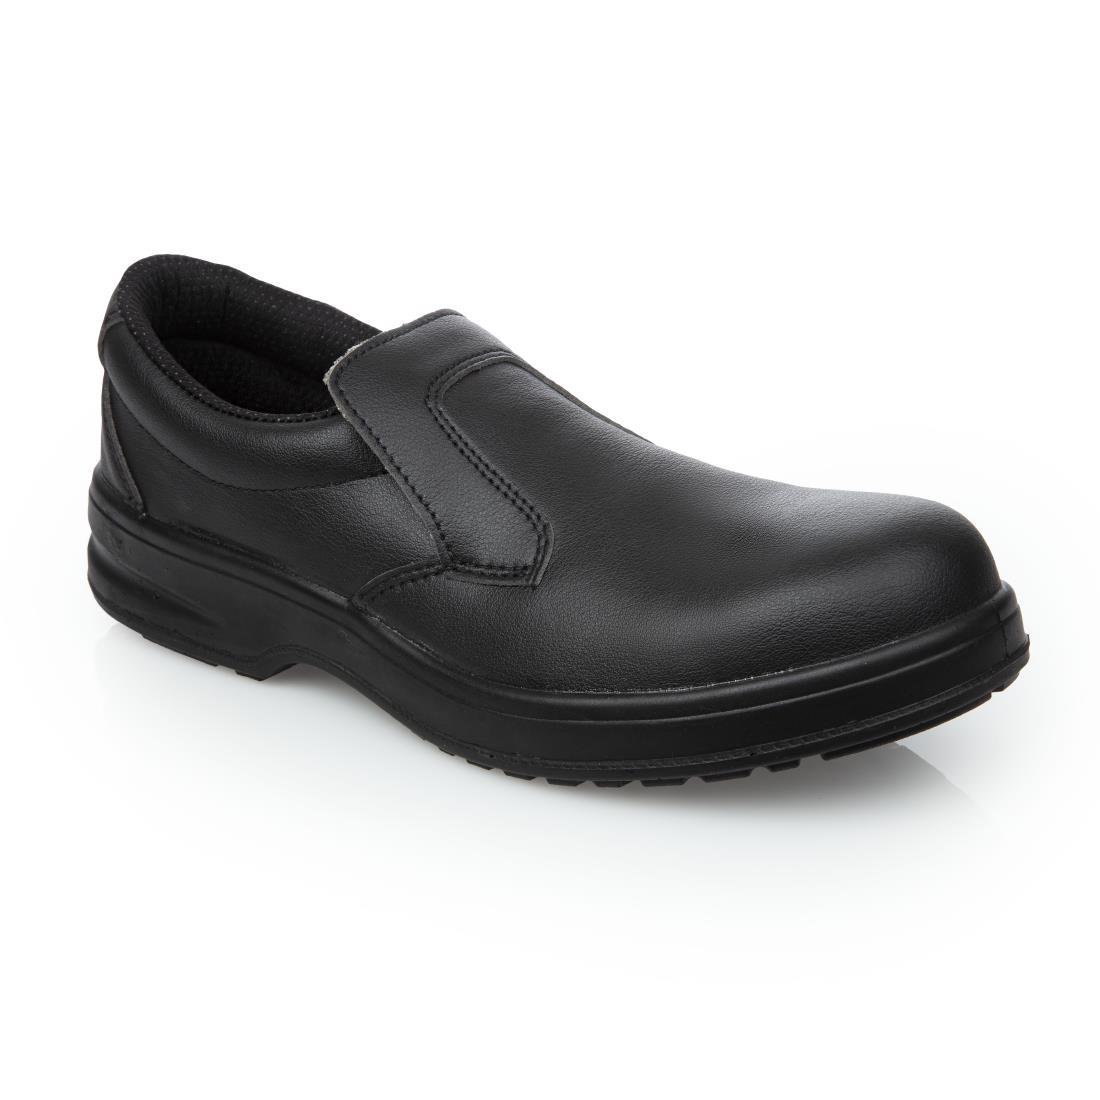 Slipbuster Lite Slip On Safety Shoes Black 45 - A845-45  - 1